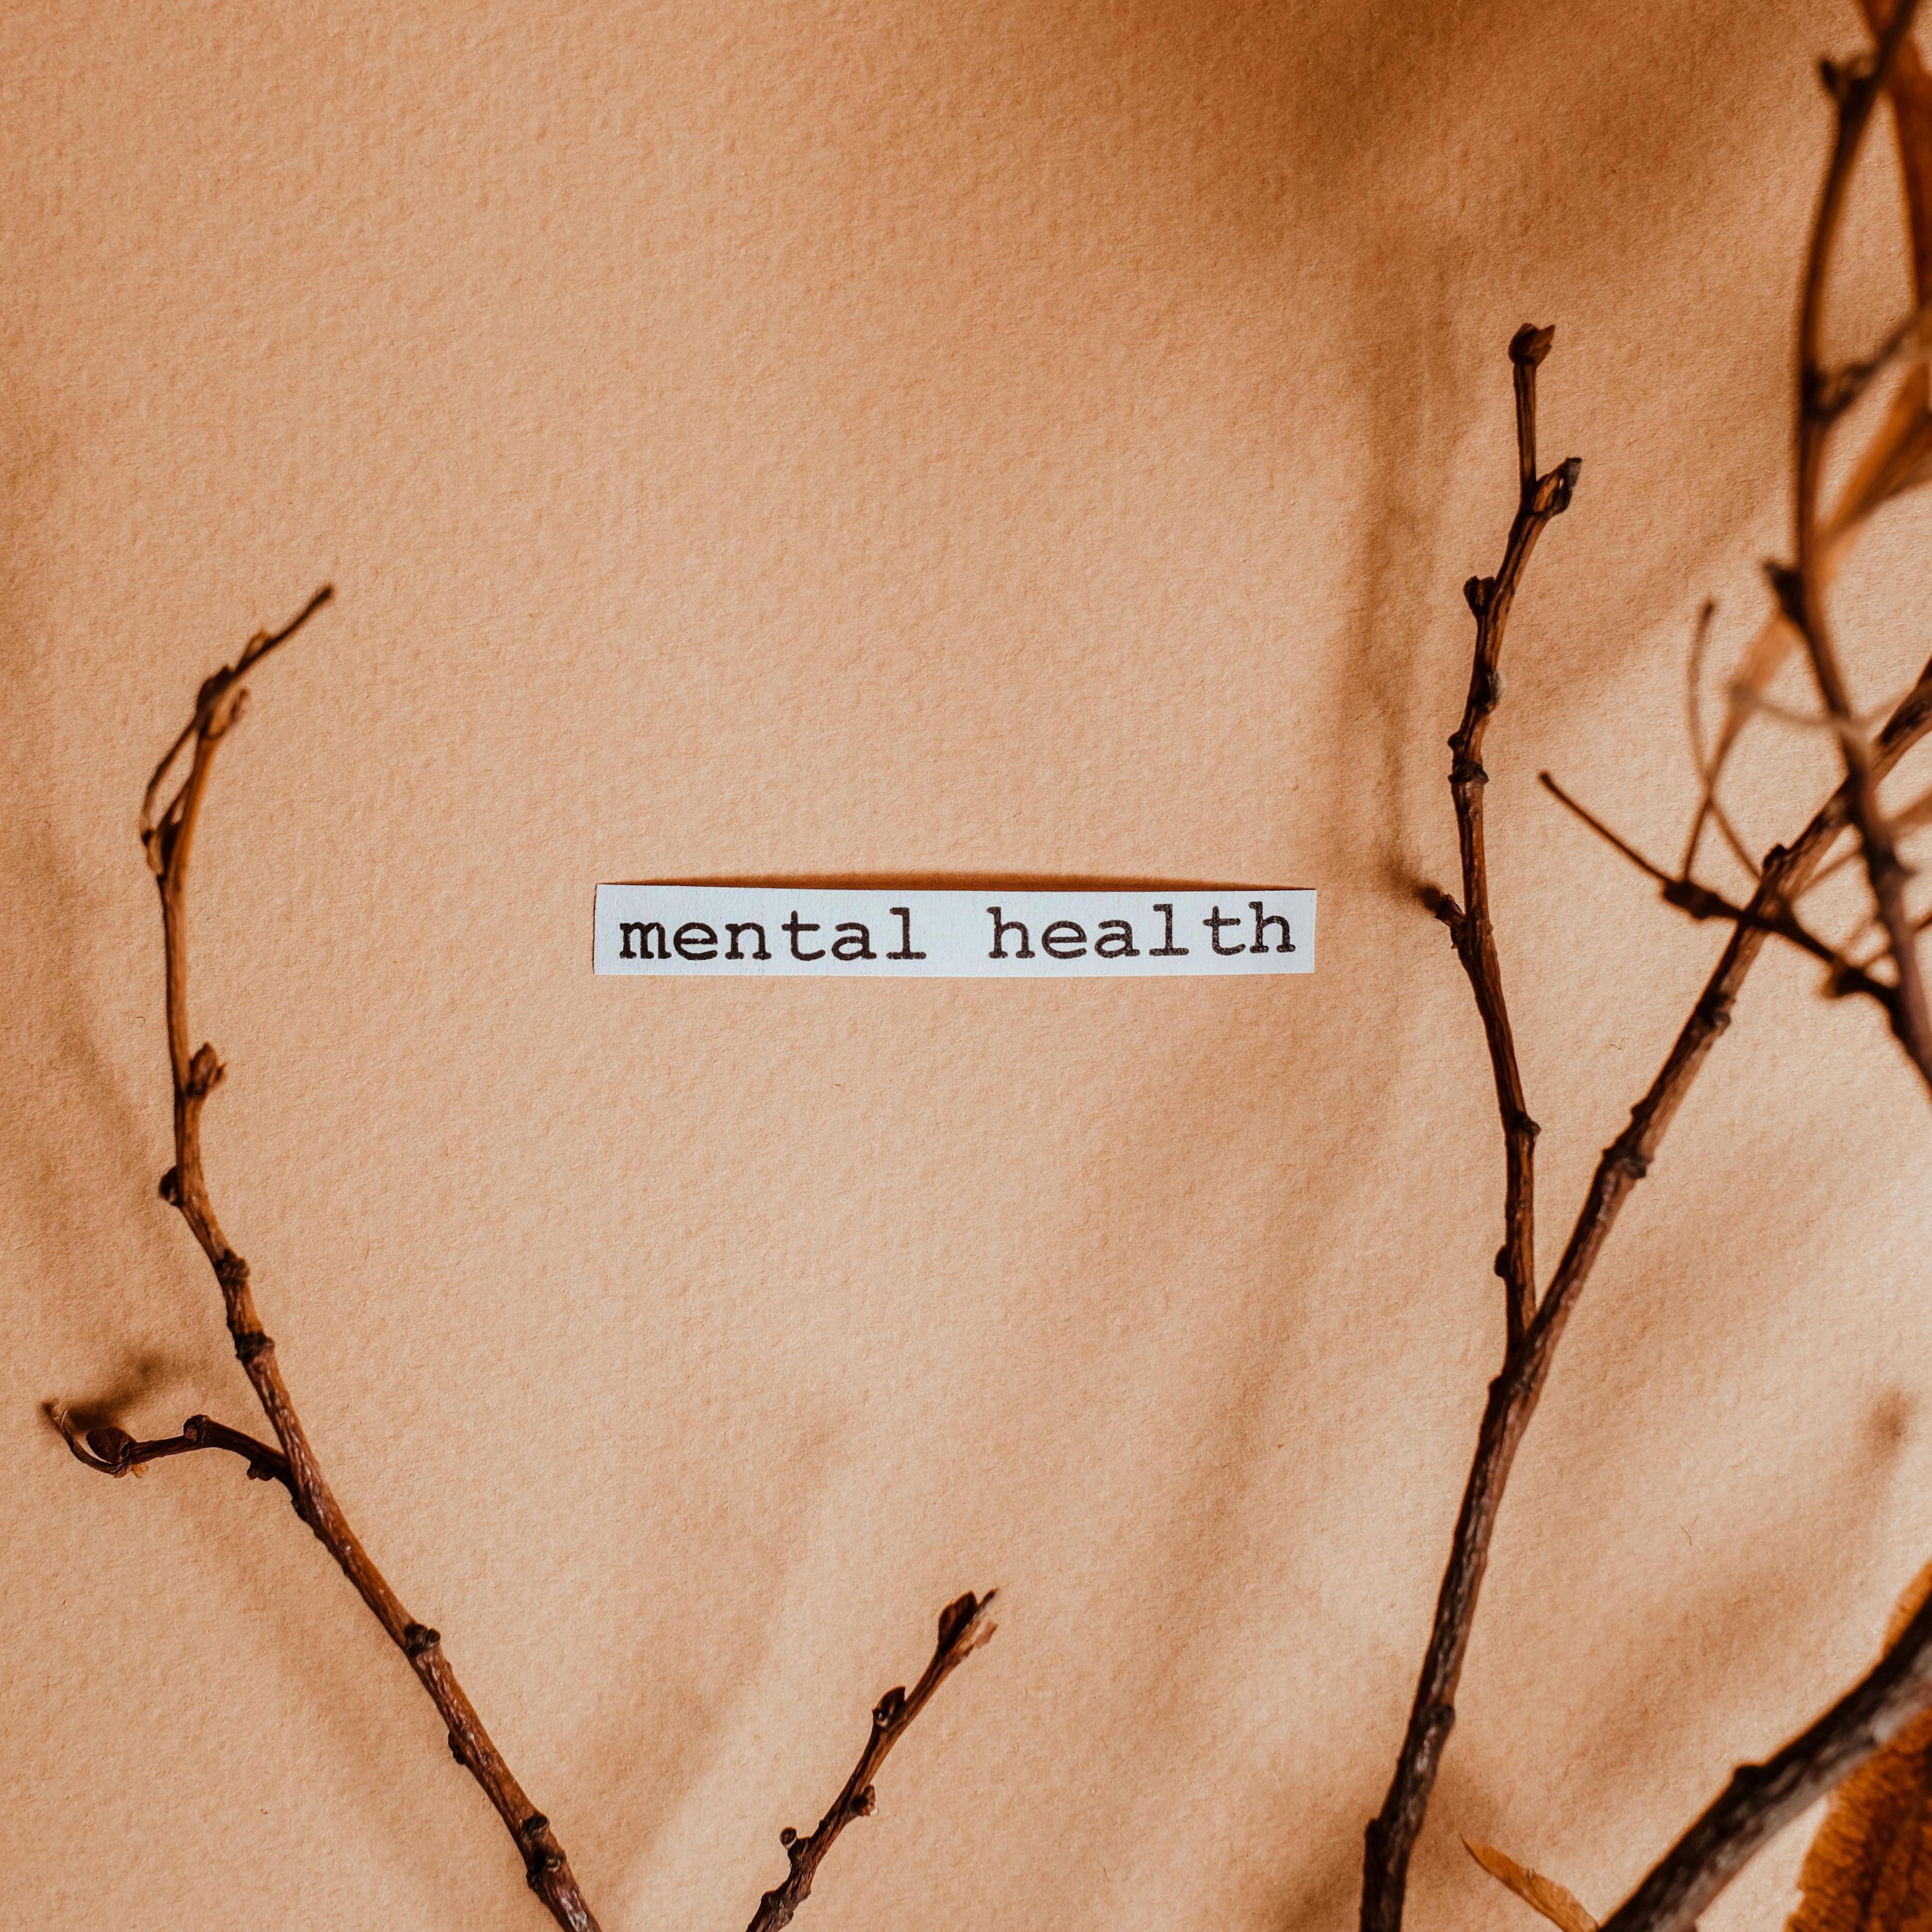 Mental Health - Overcoming Stigma, Reframing Language